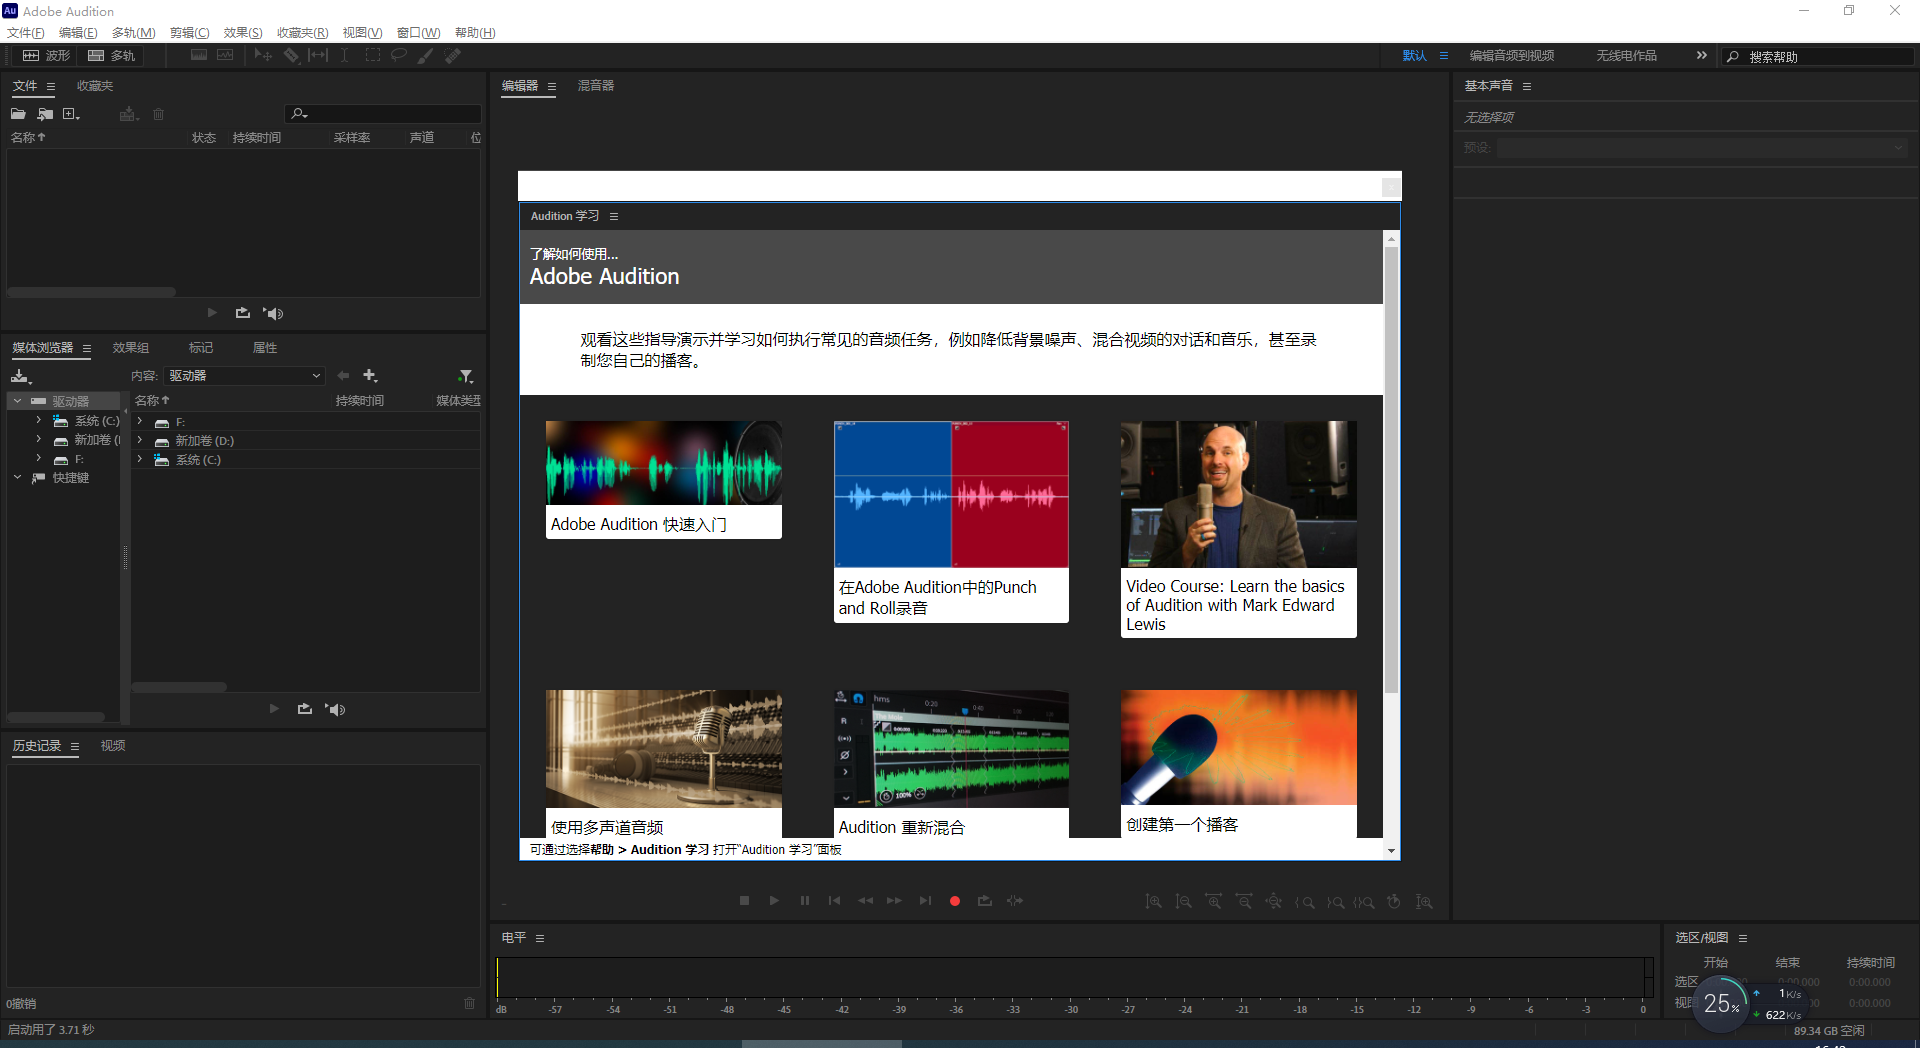 【AU 2023下载】Adobe Audition 2023 v22.0.0.54中文特别破解版安装图文教程、破解注册方法